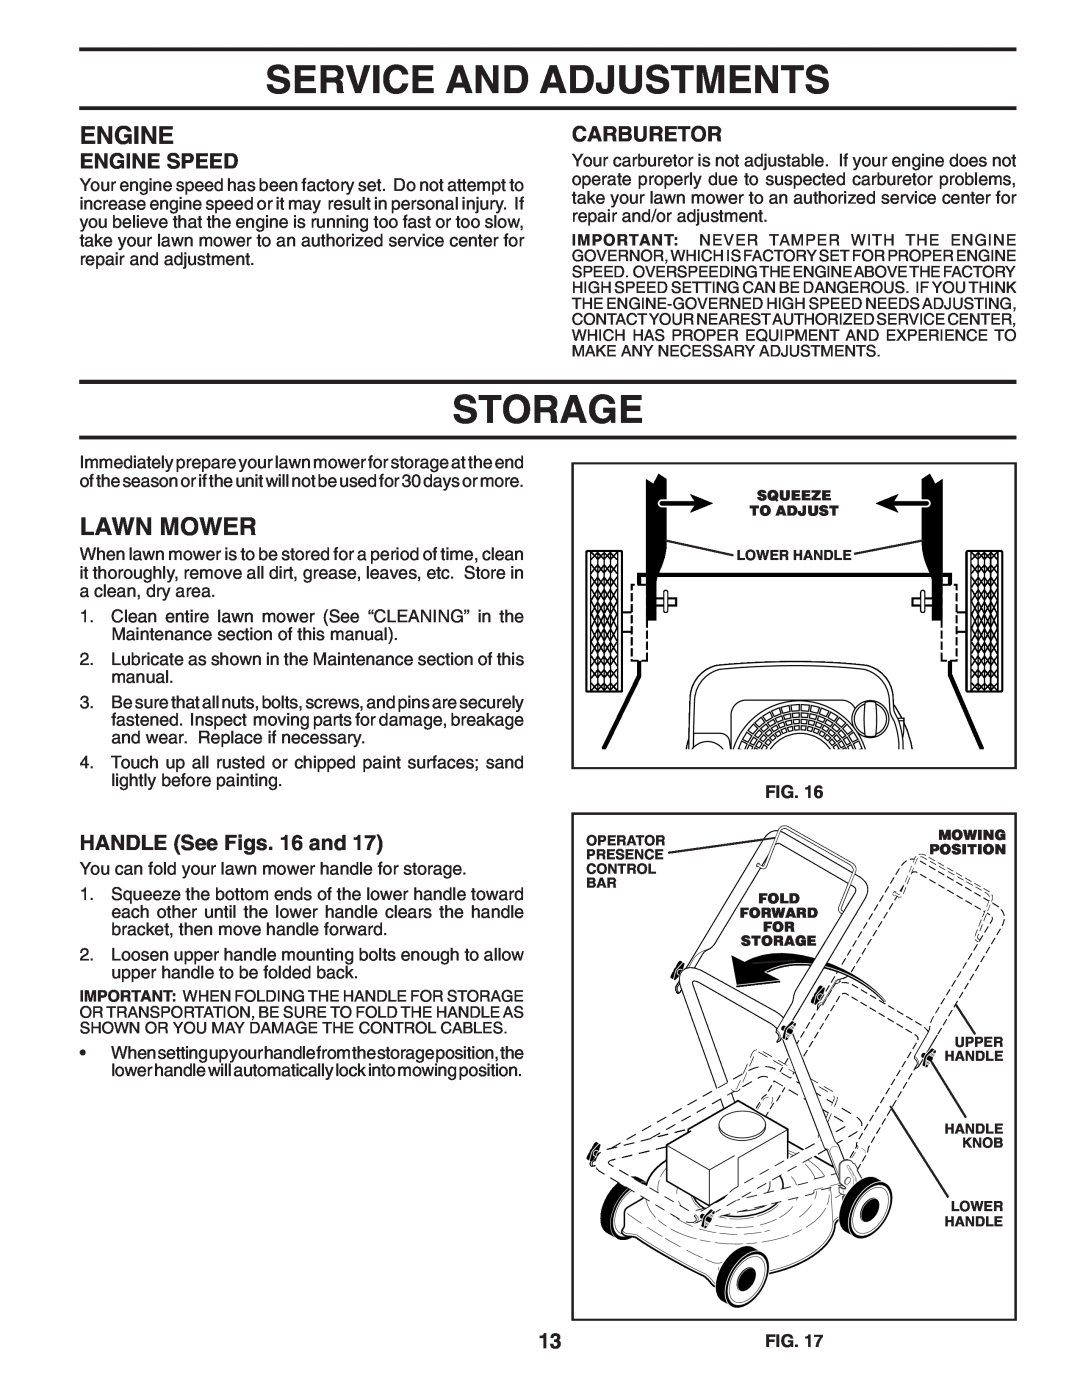 Husqvarna 6021P manual Storage, Carburetor, HANDLE See Figs. 16 and, Service And Adjustments, Lawn Mower, Engine Speed 